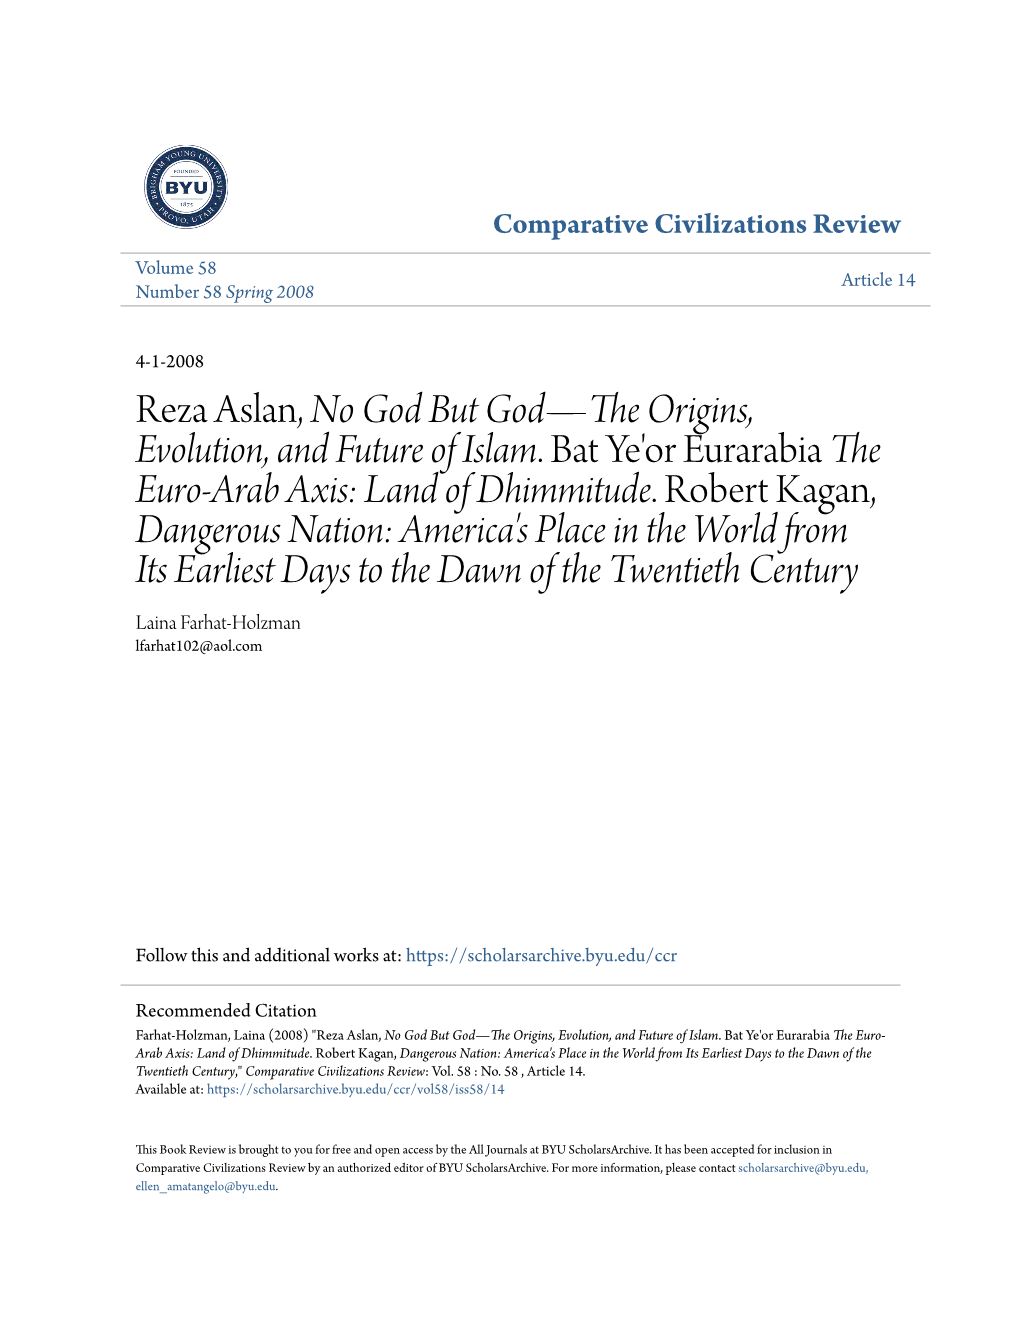 Reza Aslan, No God but God—The Origins, Evolution, and Future of Islam